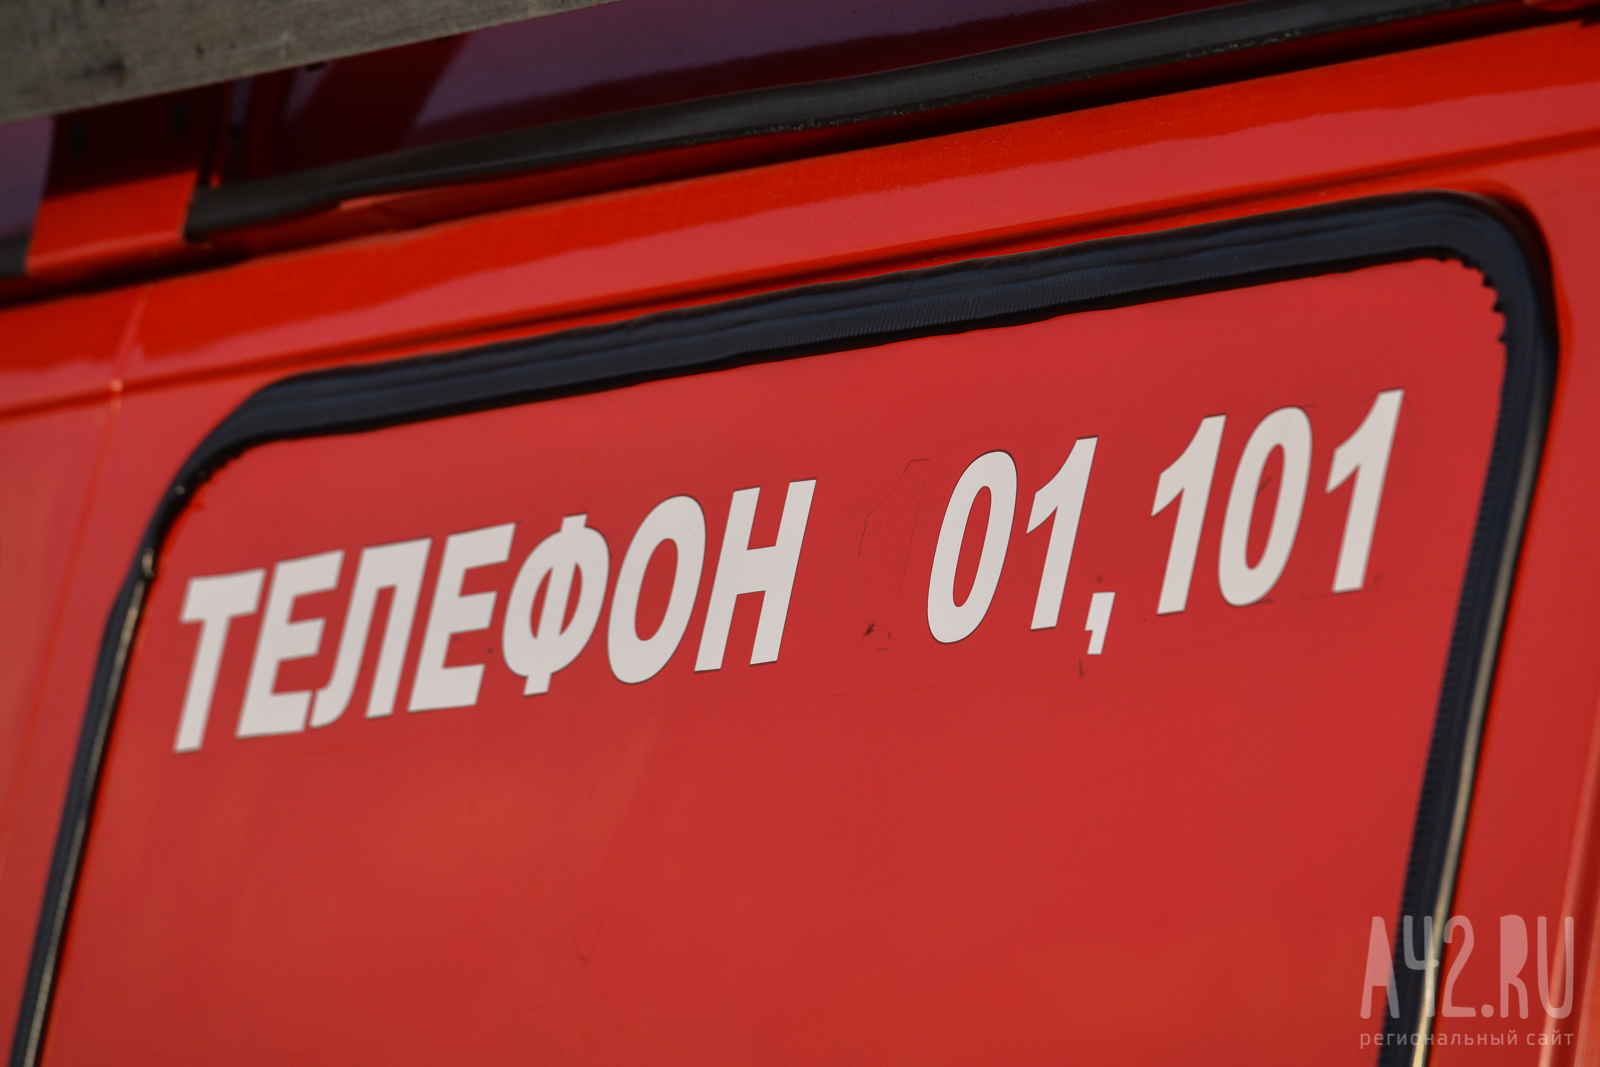 На пепелище здания в Ханты-Мансийске обнаружено тело девочки-подростка